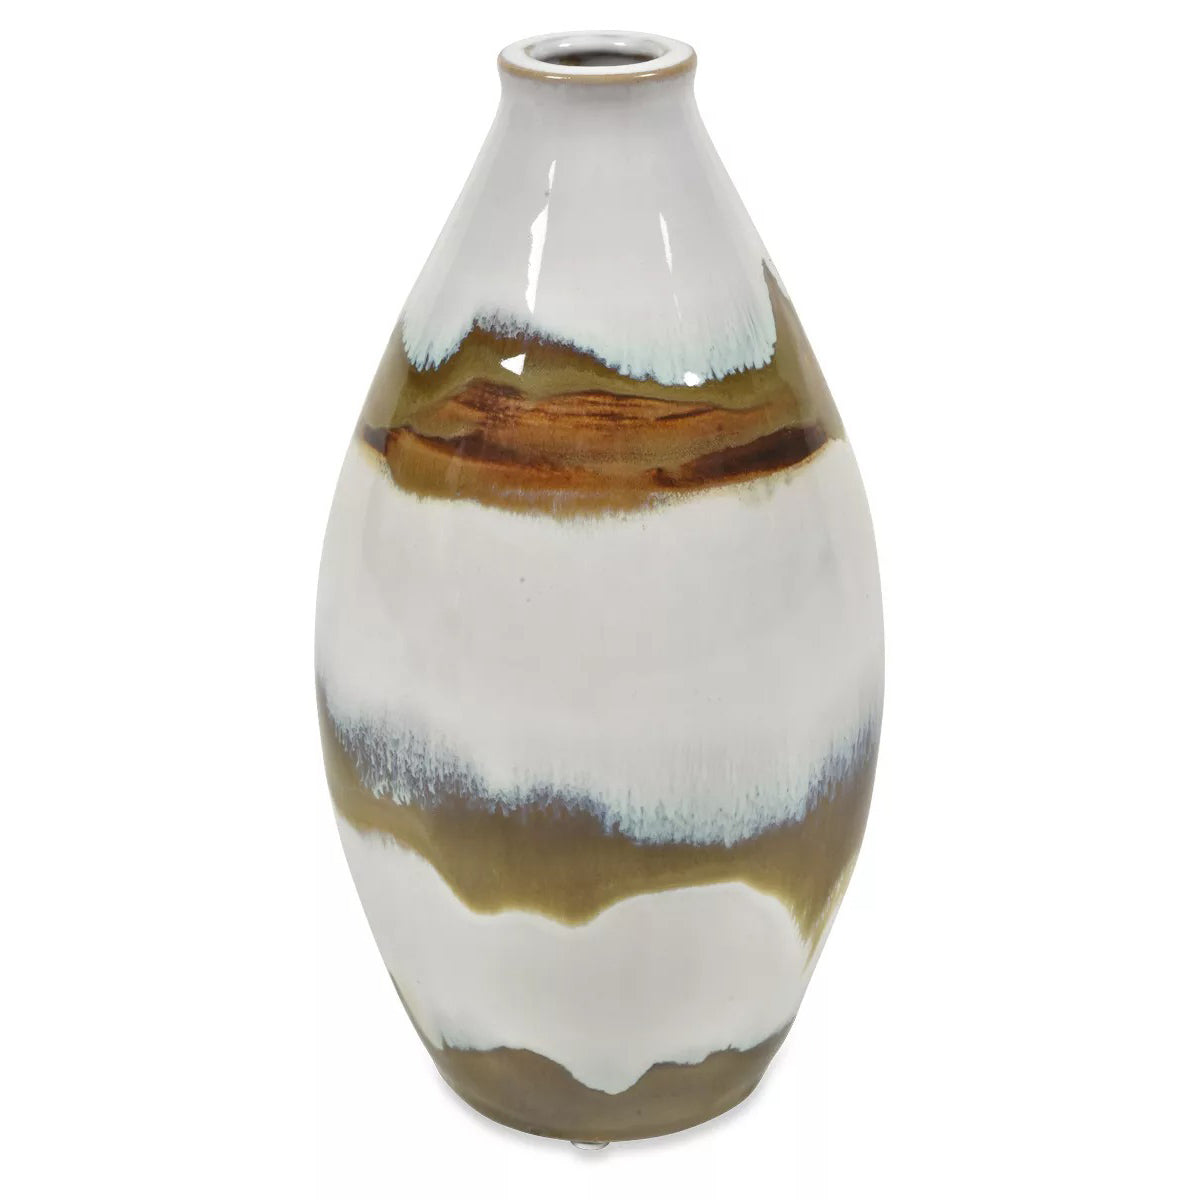 Arizona Ceramic Glazed Vase Small - White/Brown